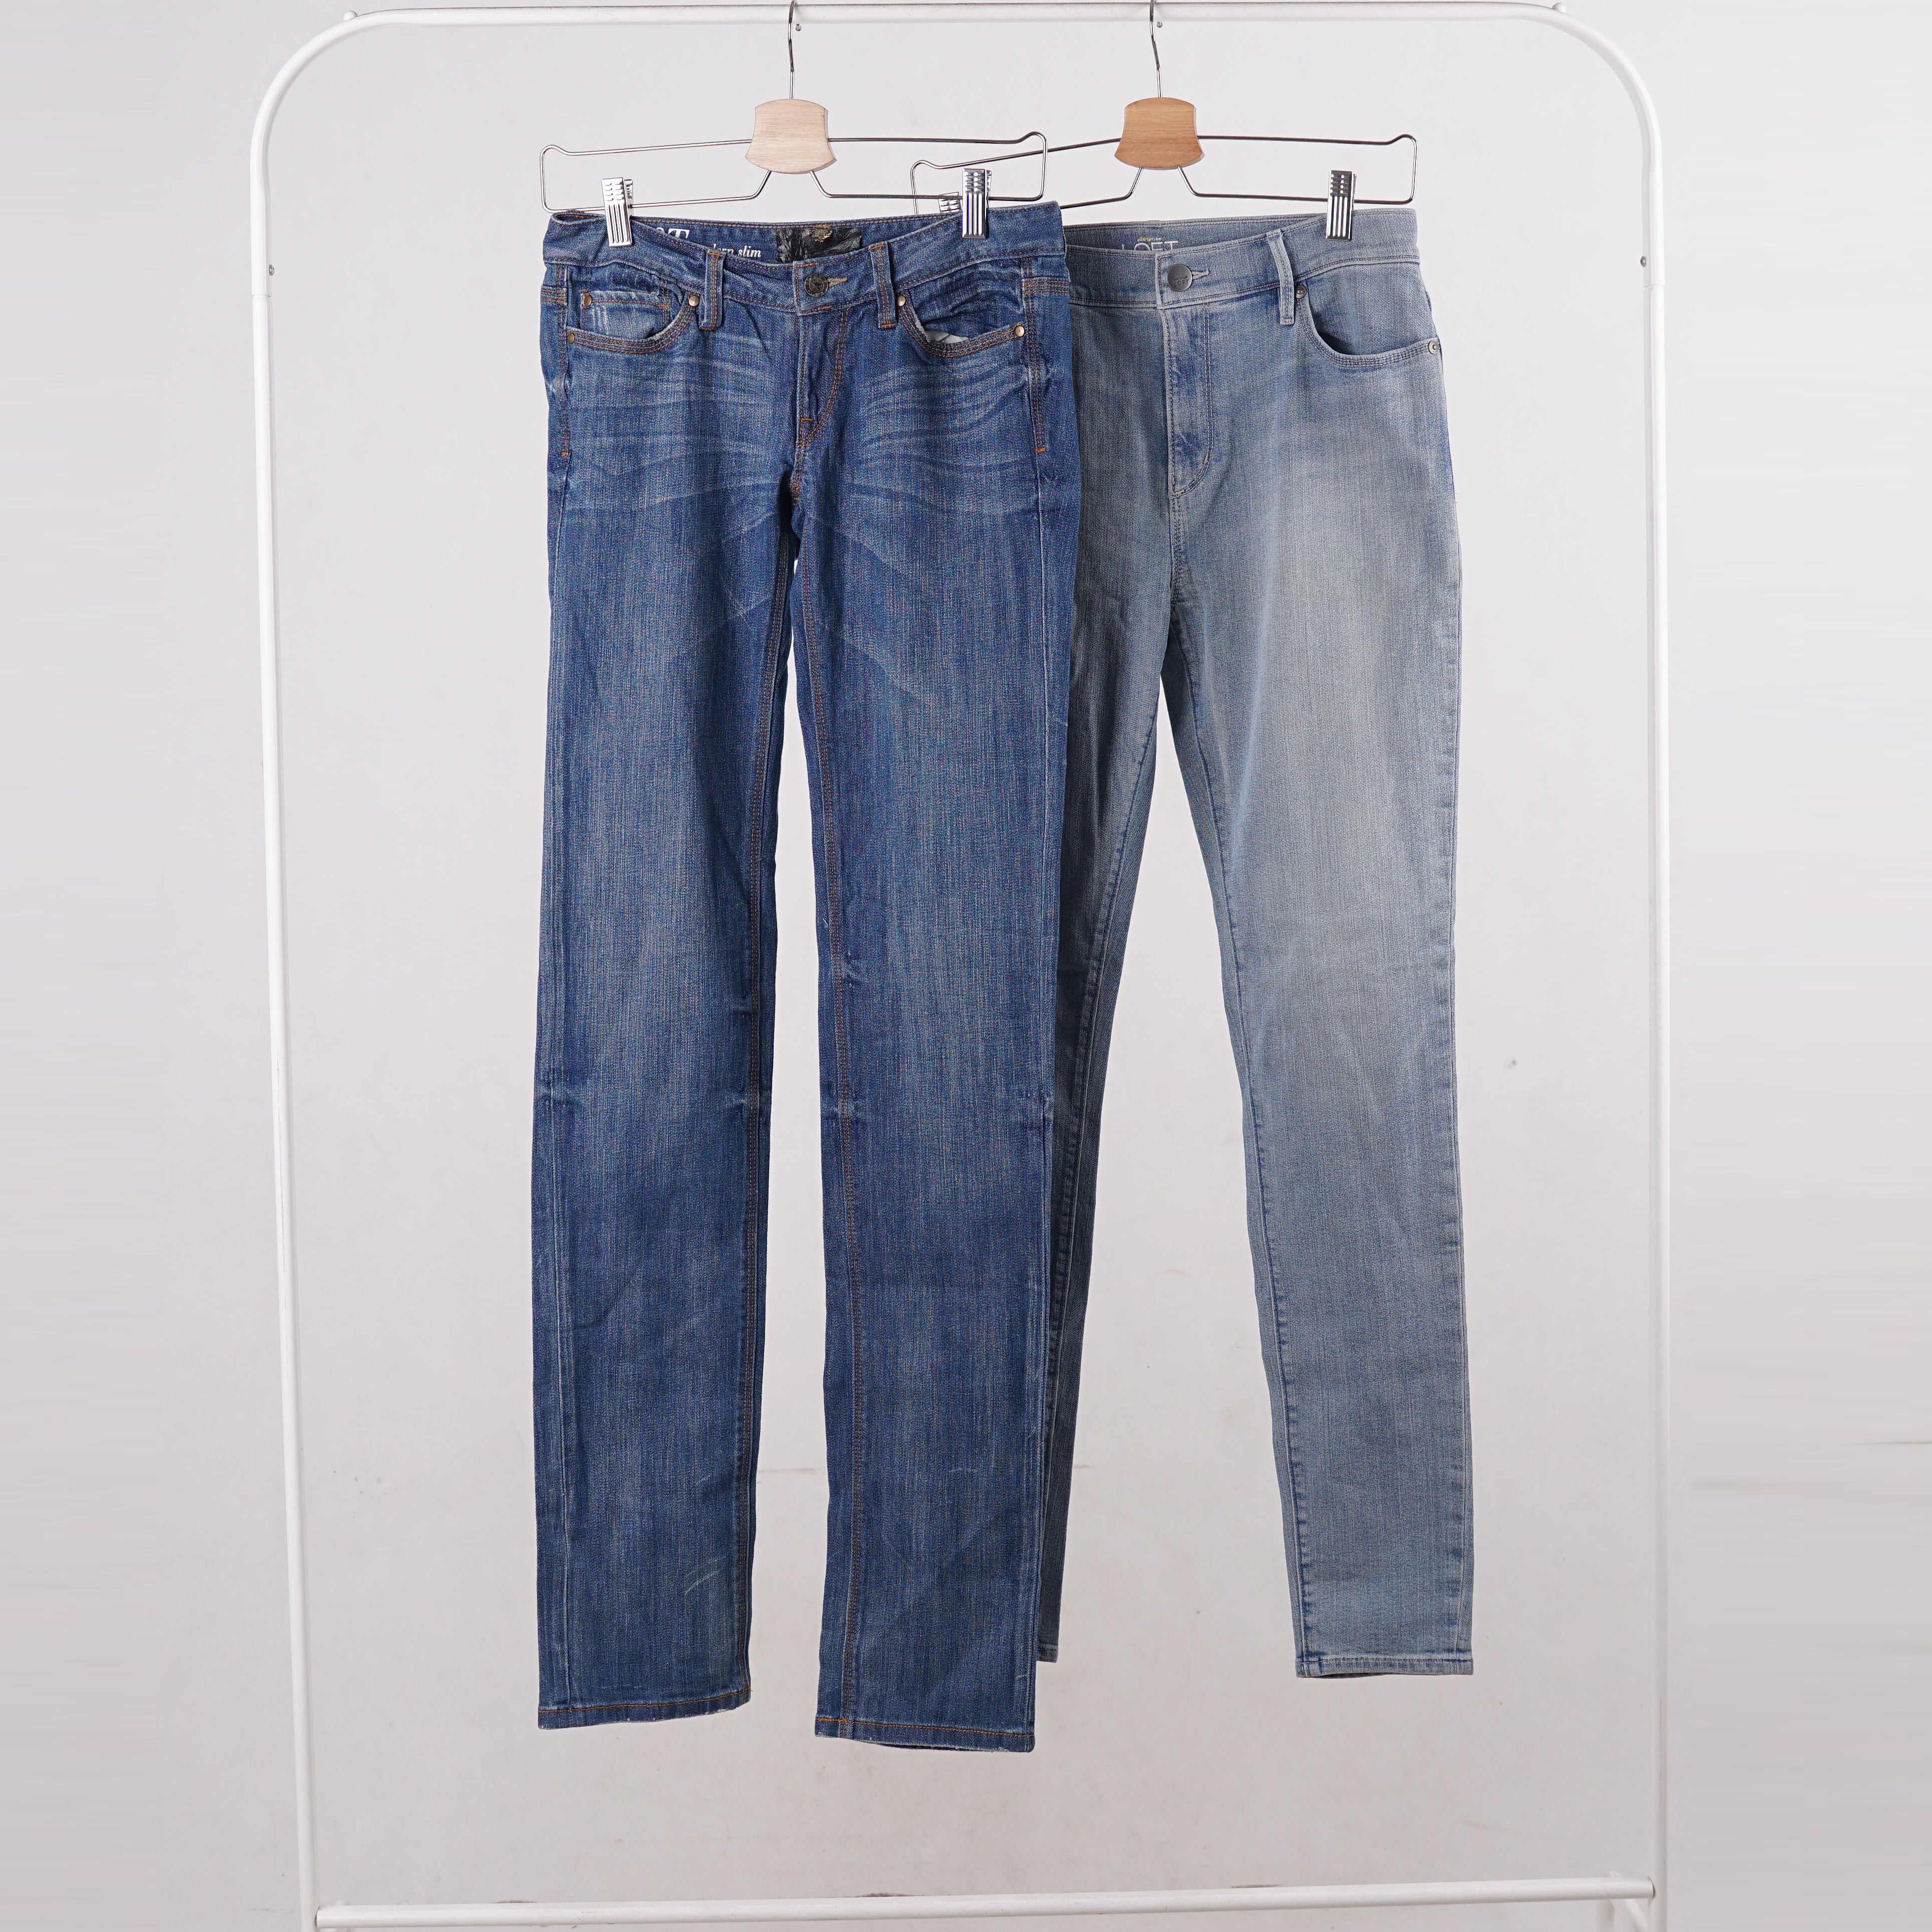 Celana Jeans Wanita - Denim and Light Blue Modern Slim Jeans (LDW 65,LDW 39)